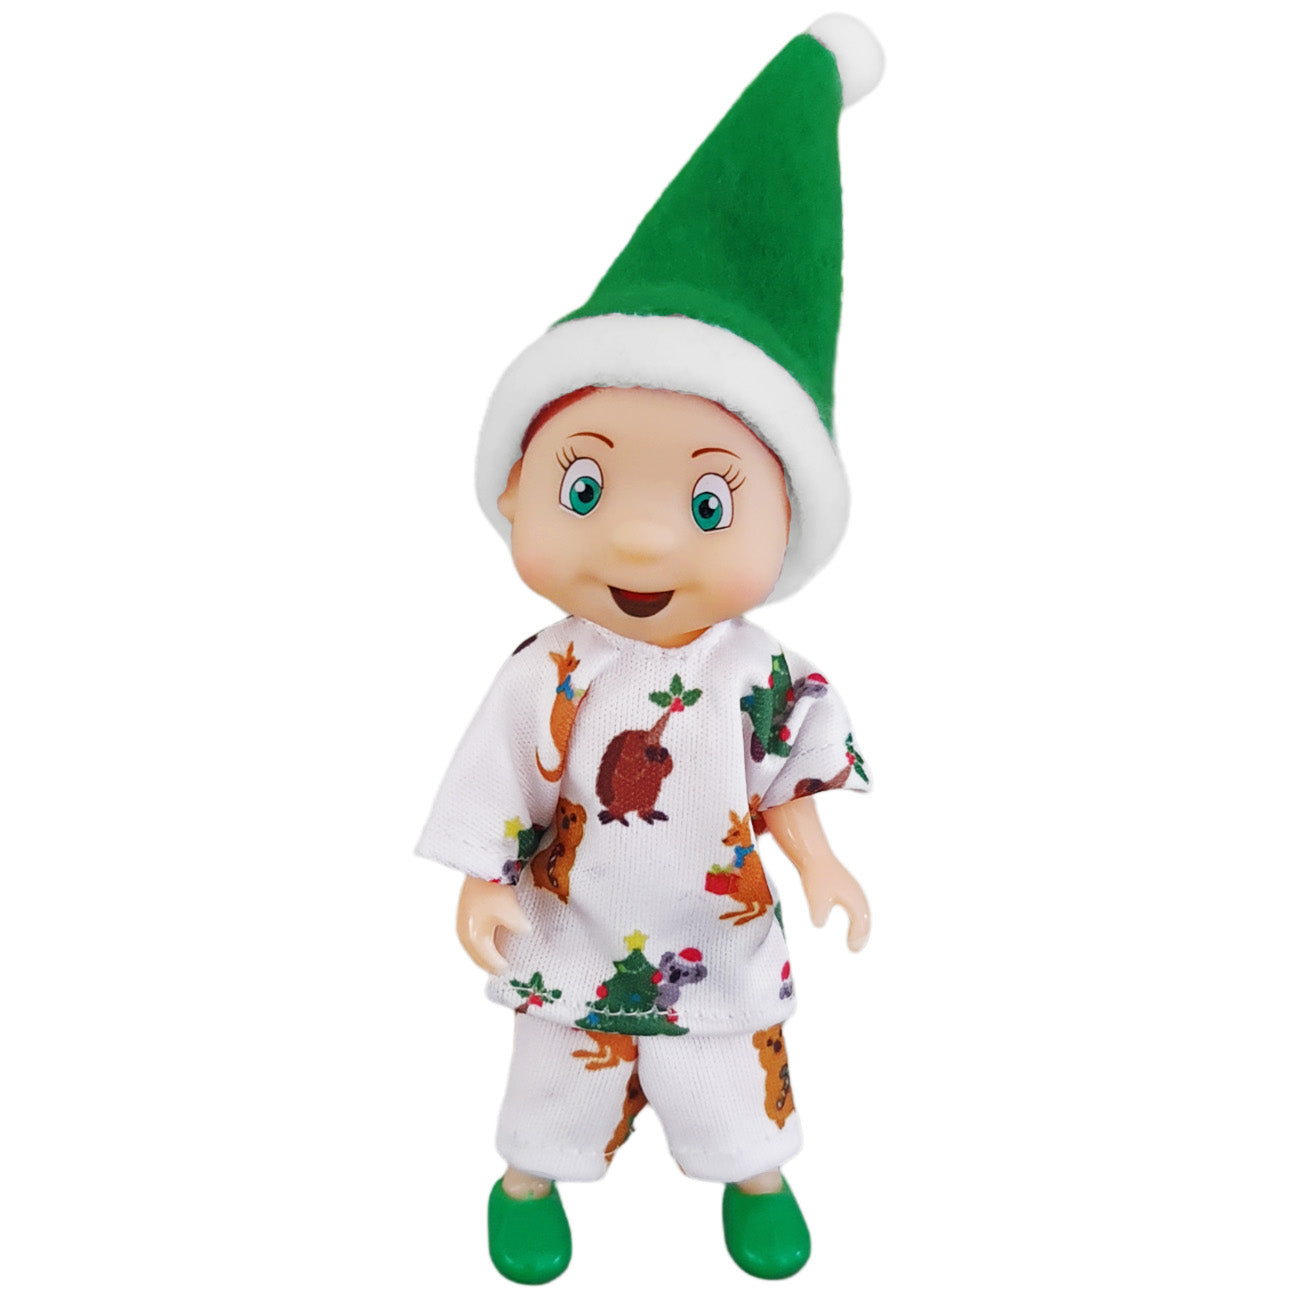 Elf Toddler dressed in aussie themed pyjamas